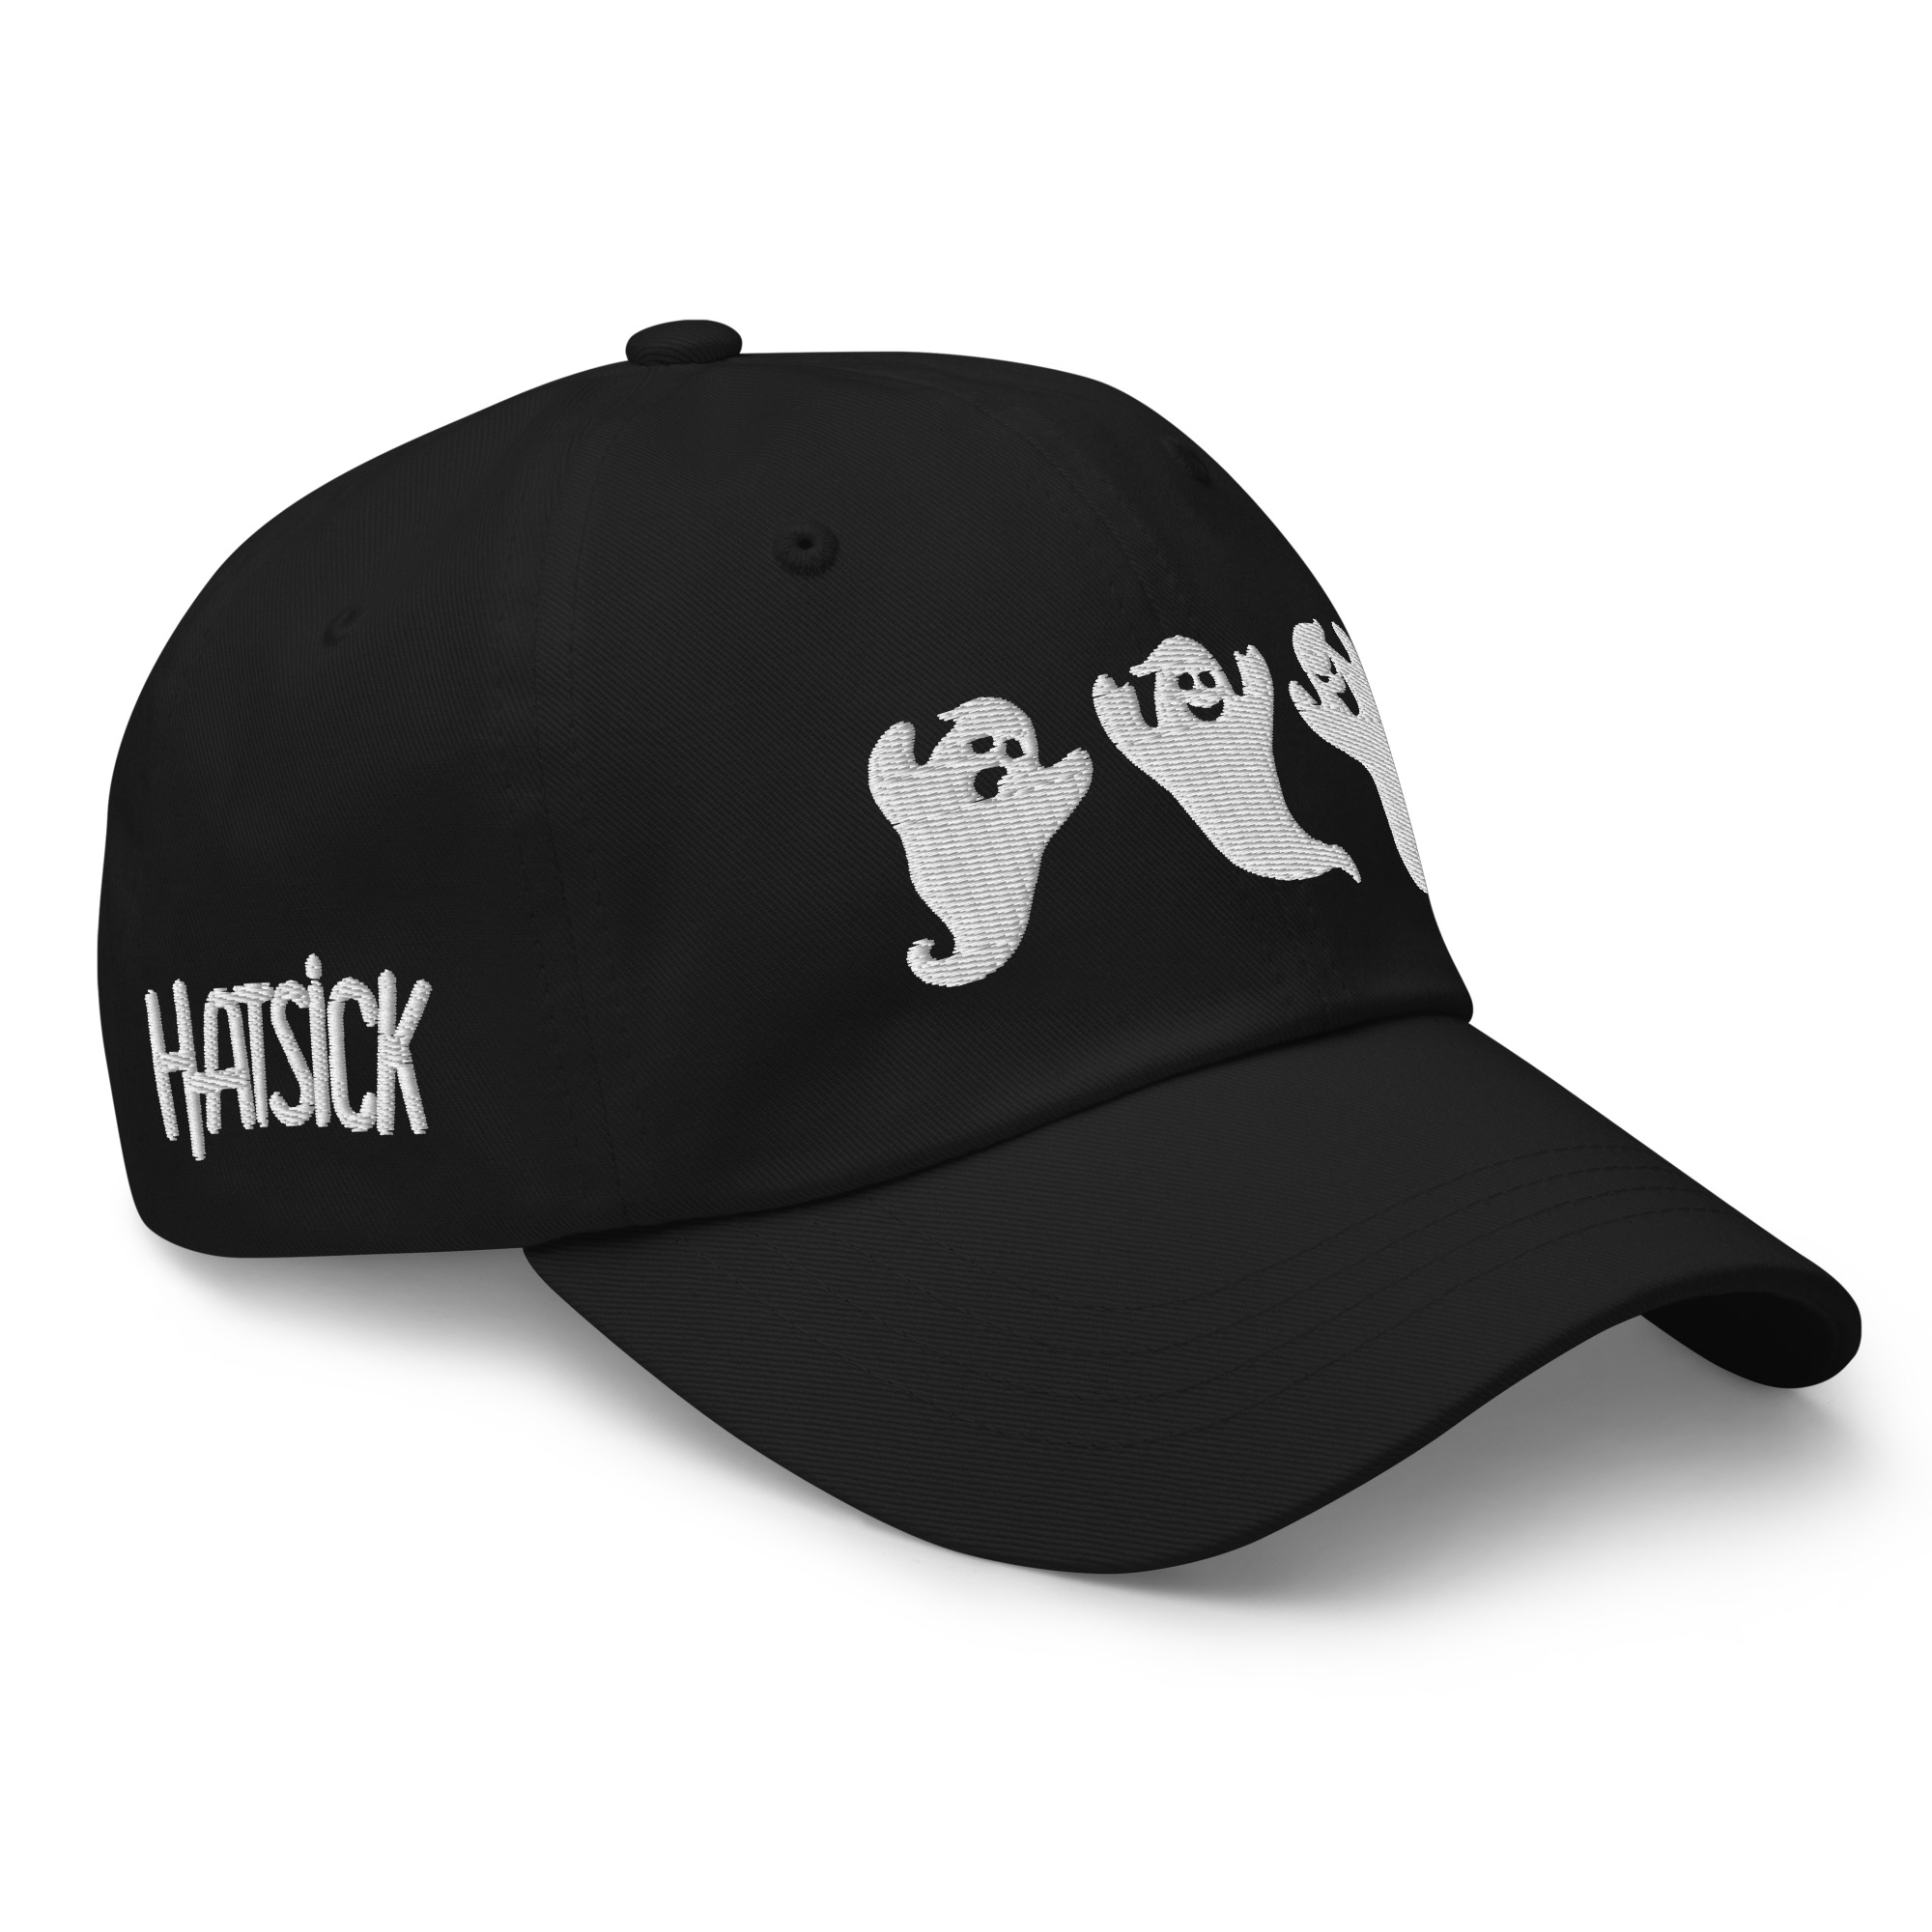 Ghosty Black Baseball hat